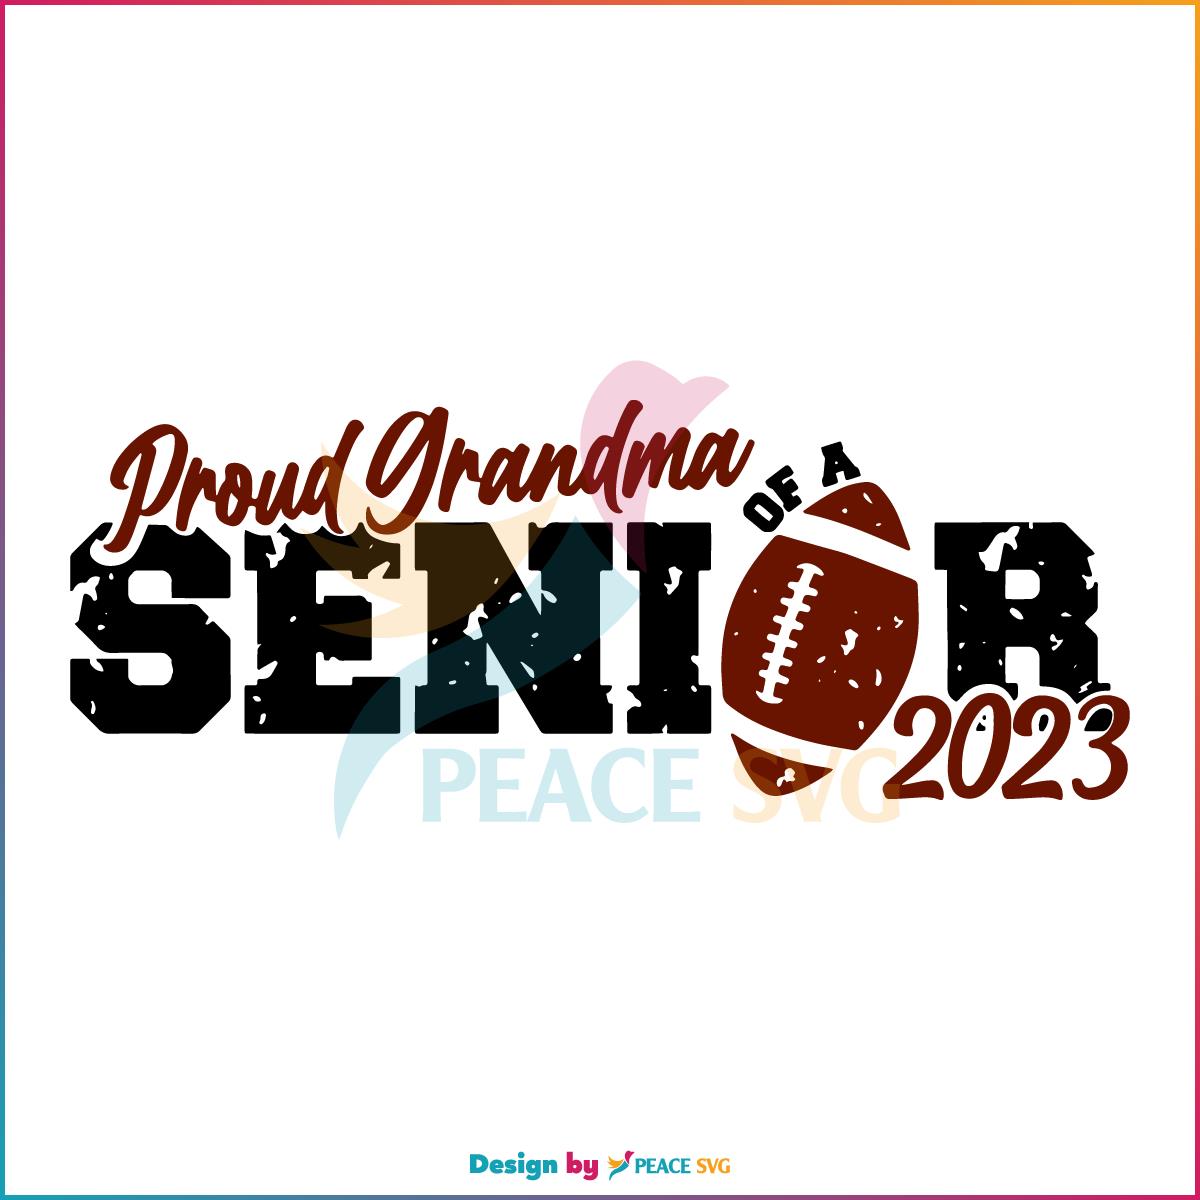 proud-grandma-of-a-senior-2023-football-grandma-svg